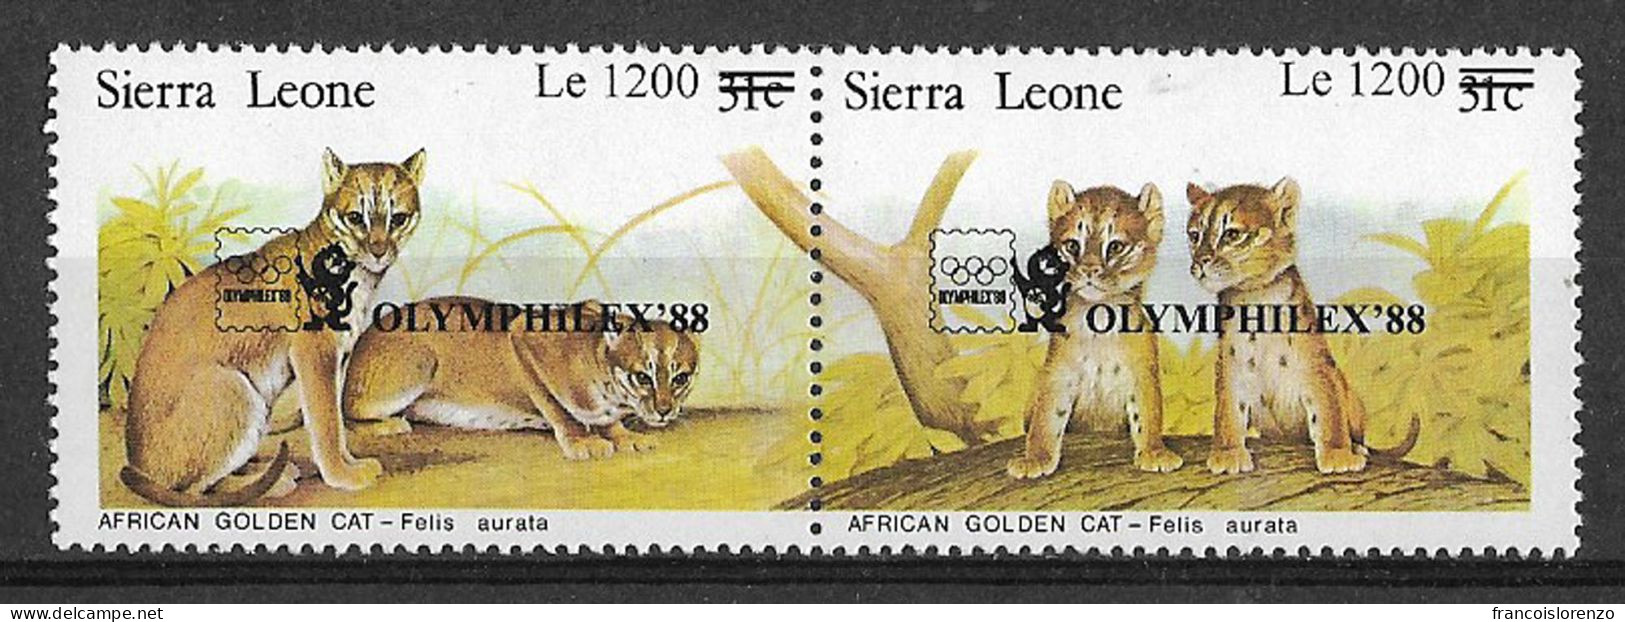 Sierra Leone 1988 Wild Animals Cats Of Prey Philately South Korea Stamp Exhibition Olymphilex Rare Set MNH - Raubkatzen